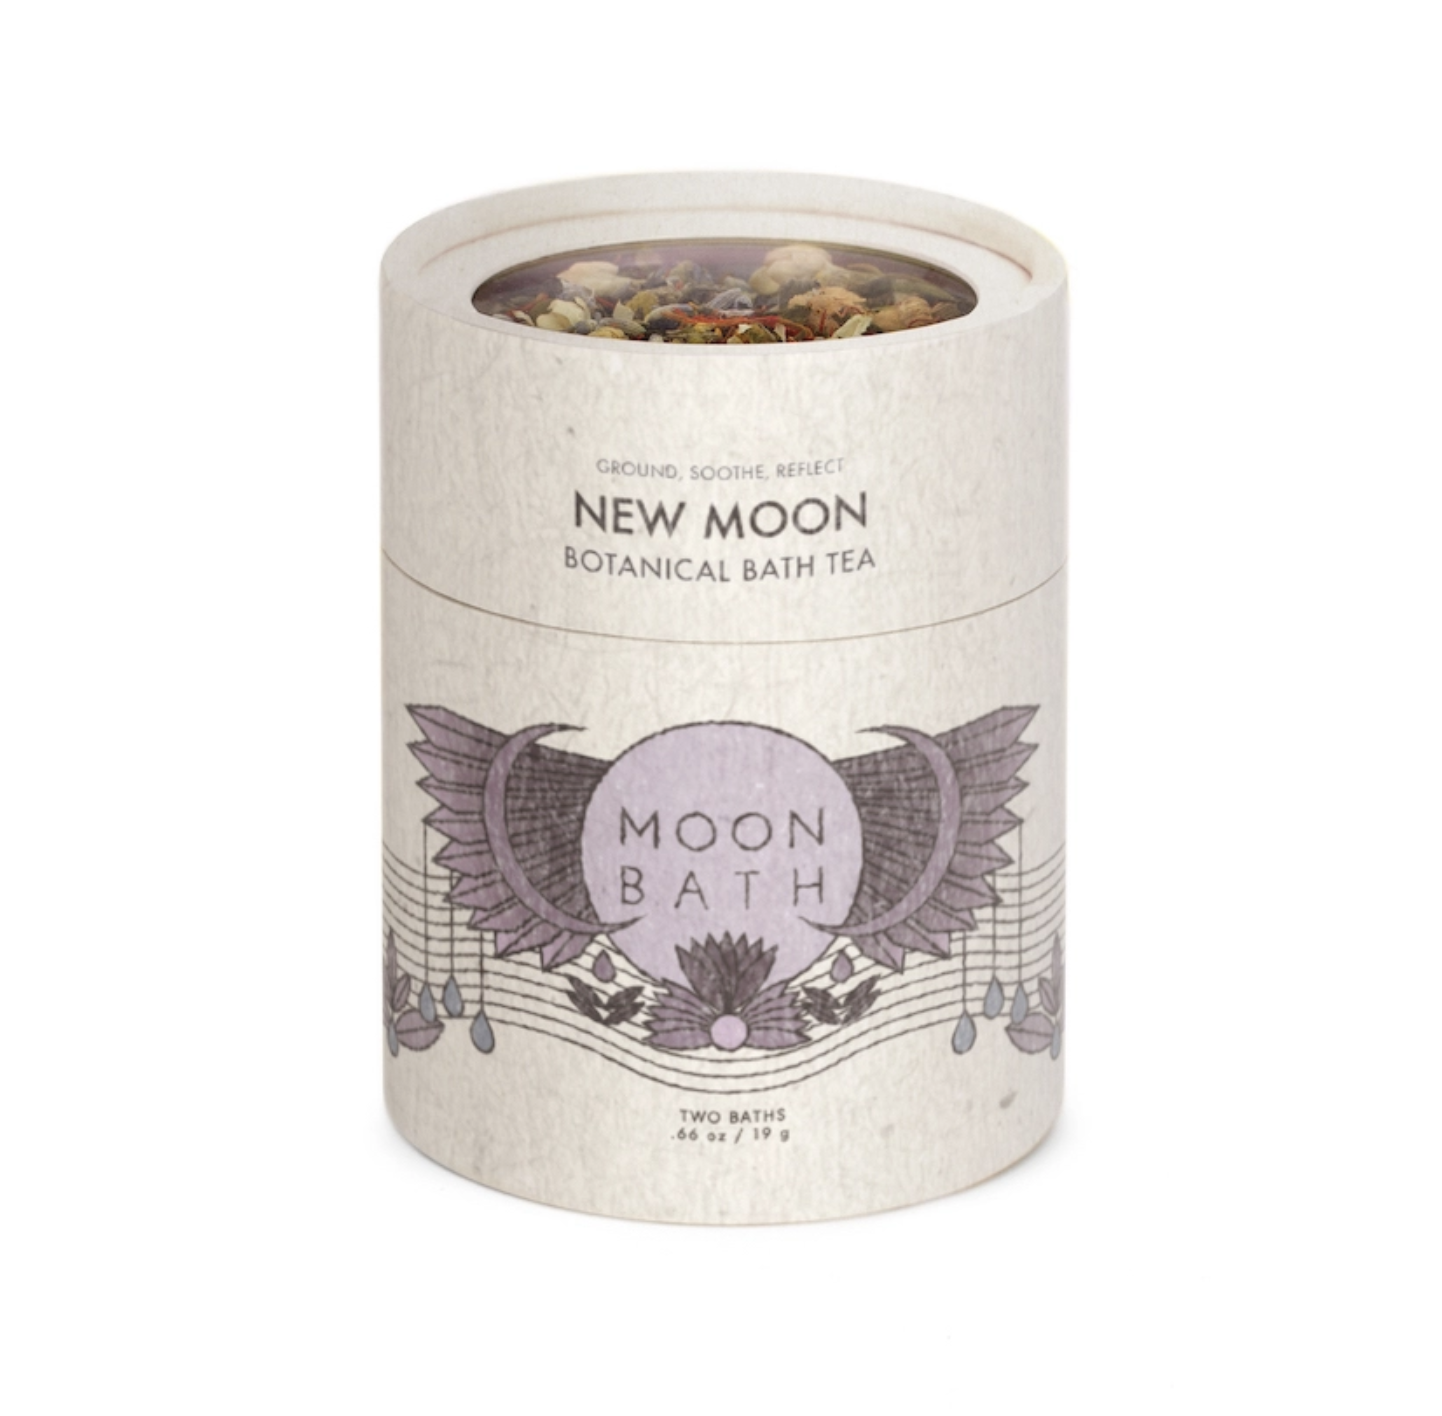 New Moon Botanical Bath Tea